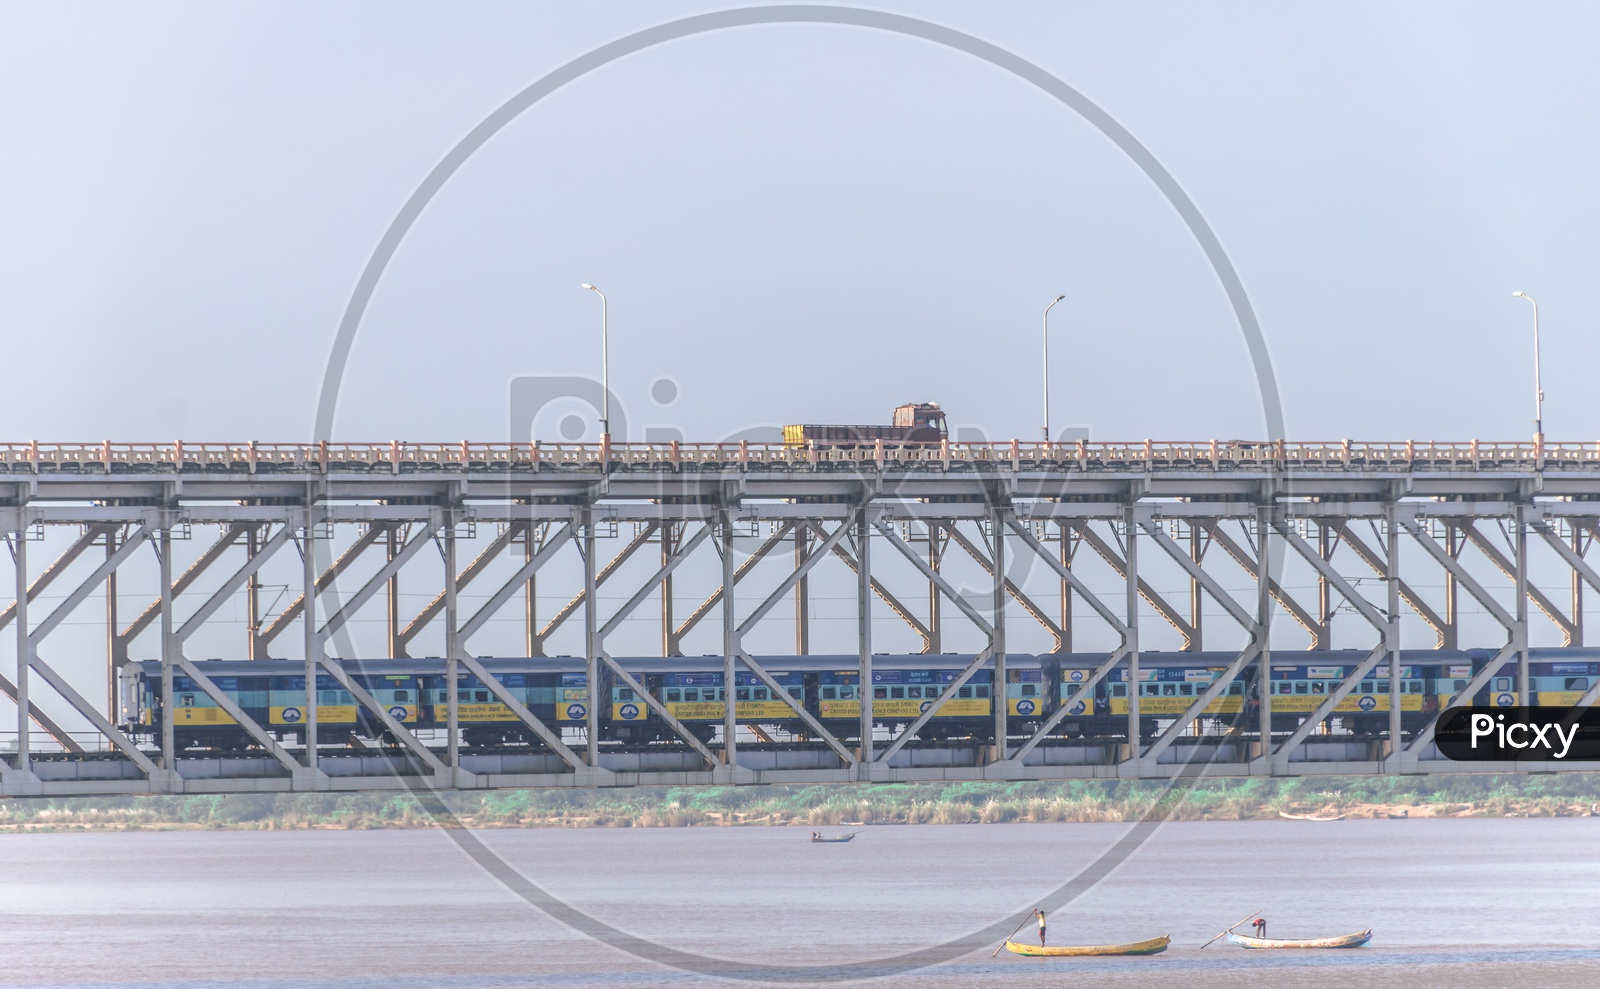 3 modes of transport in single pic (Rajahmundry Bridge)